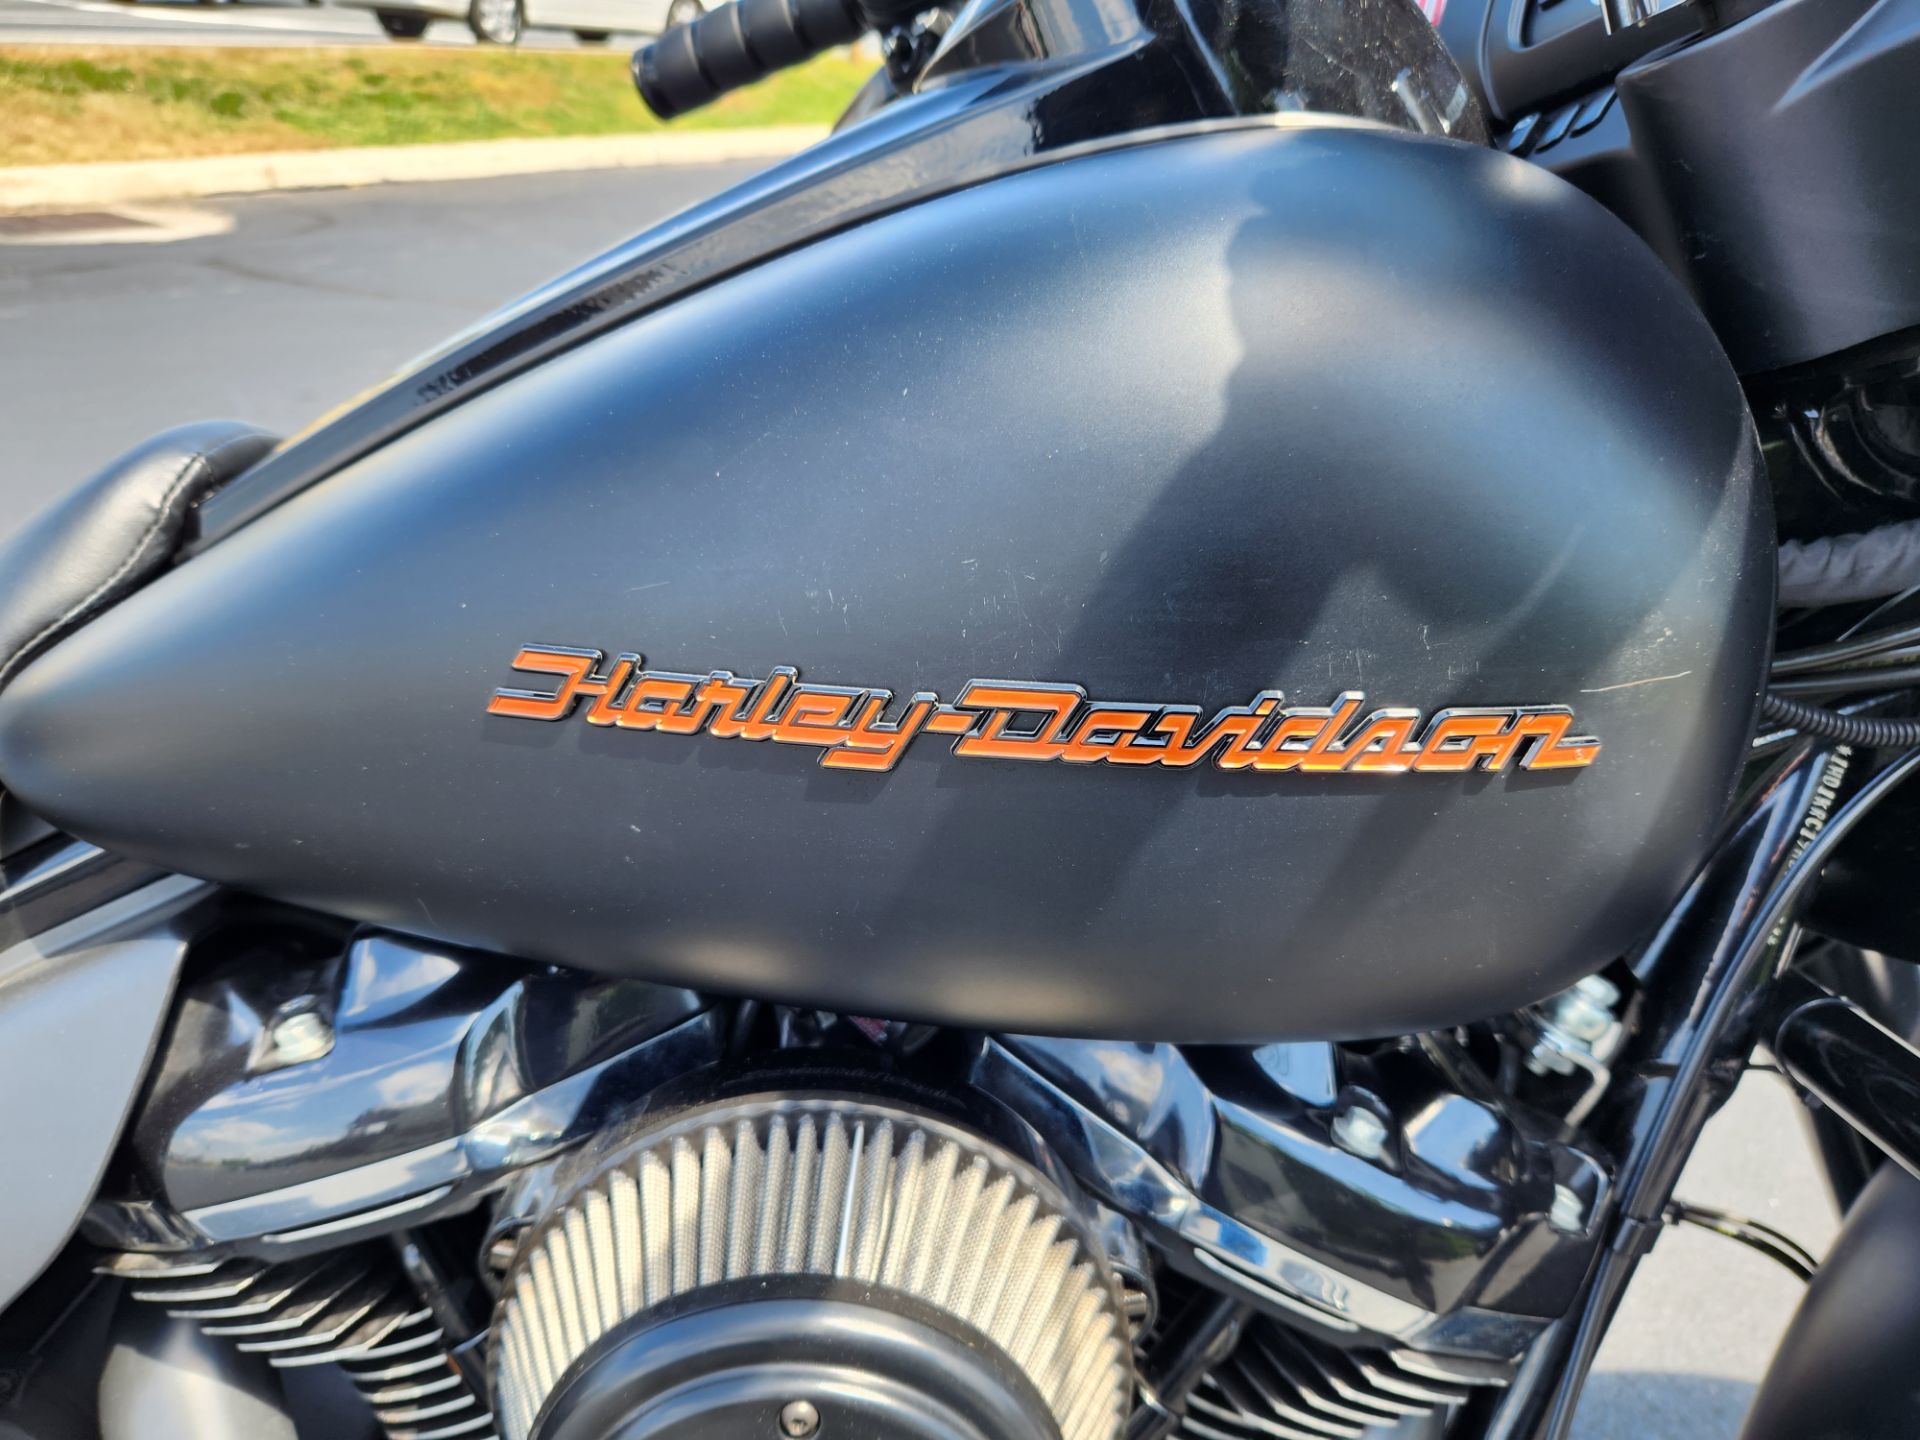 2017 Harley-Davidson Street Glide® Special in Lynchburg, Virginia - Photo 22